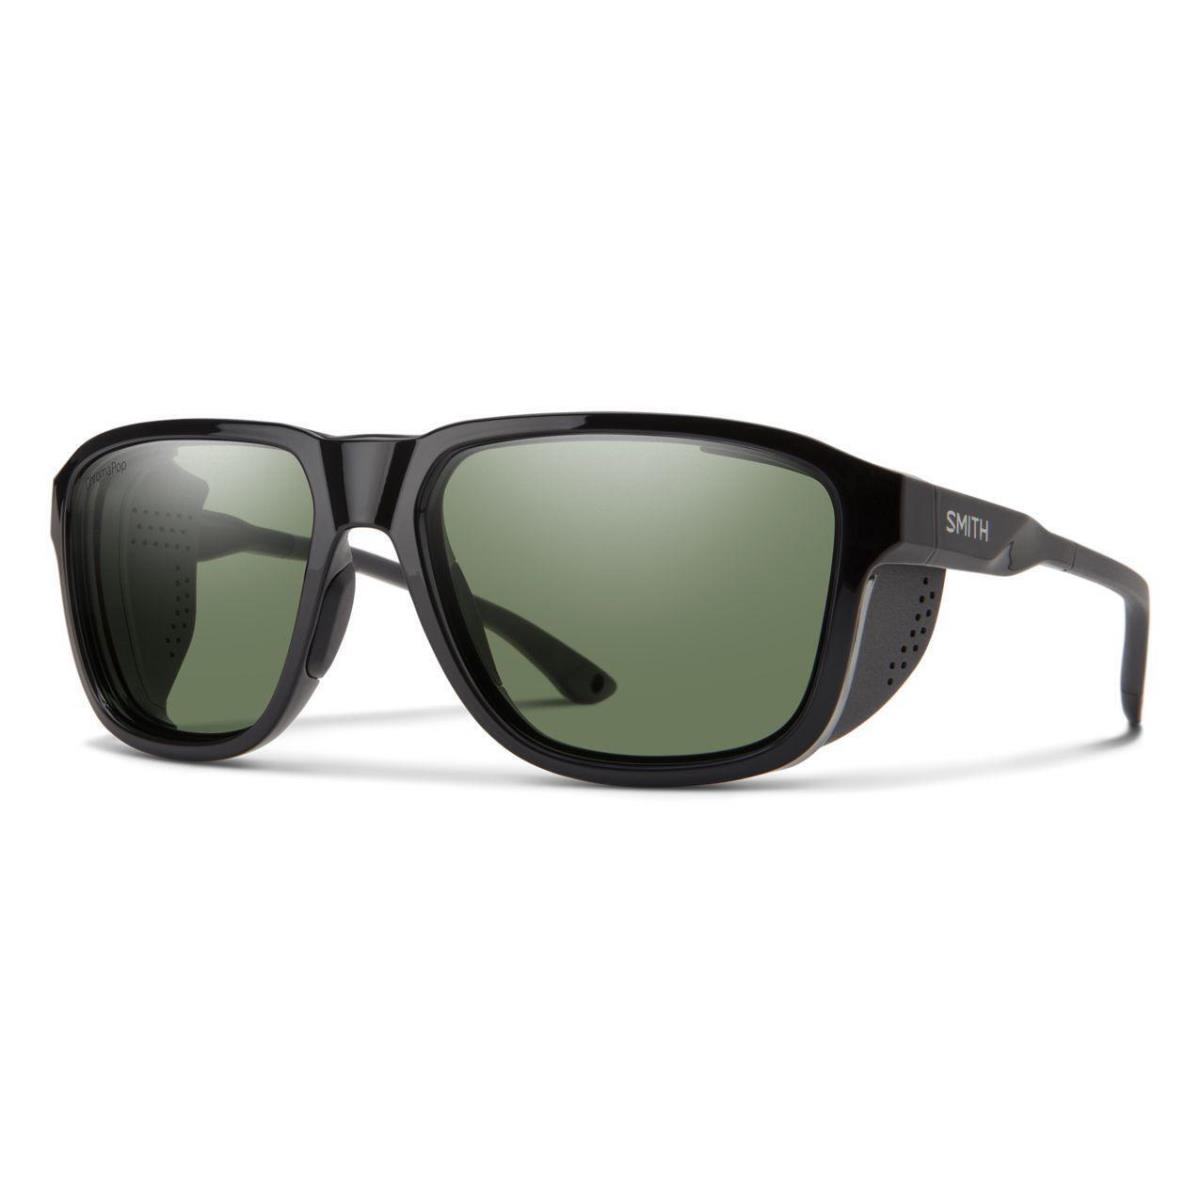 Smith Embark Sunglasses Black - Chromapop Polarized Gray Green